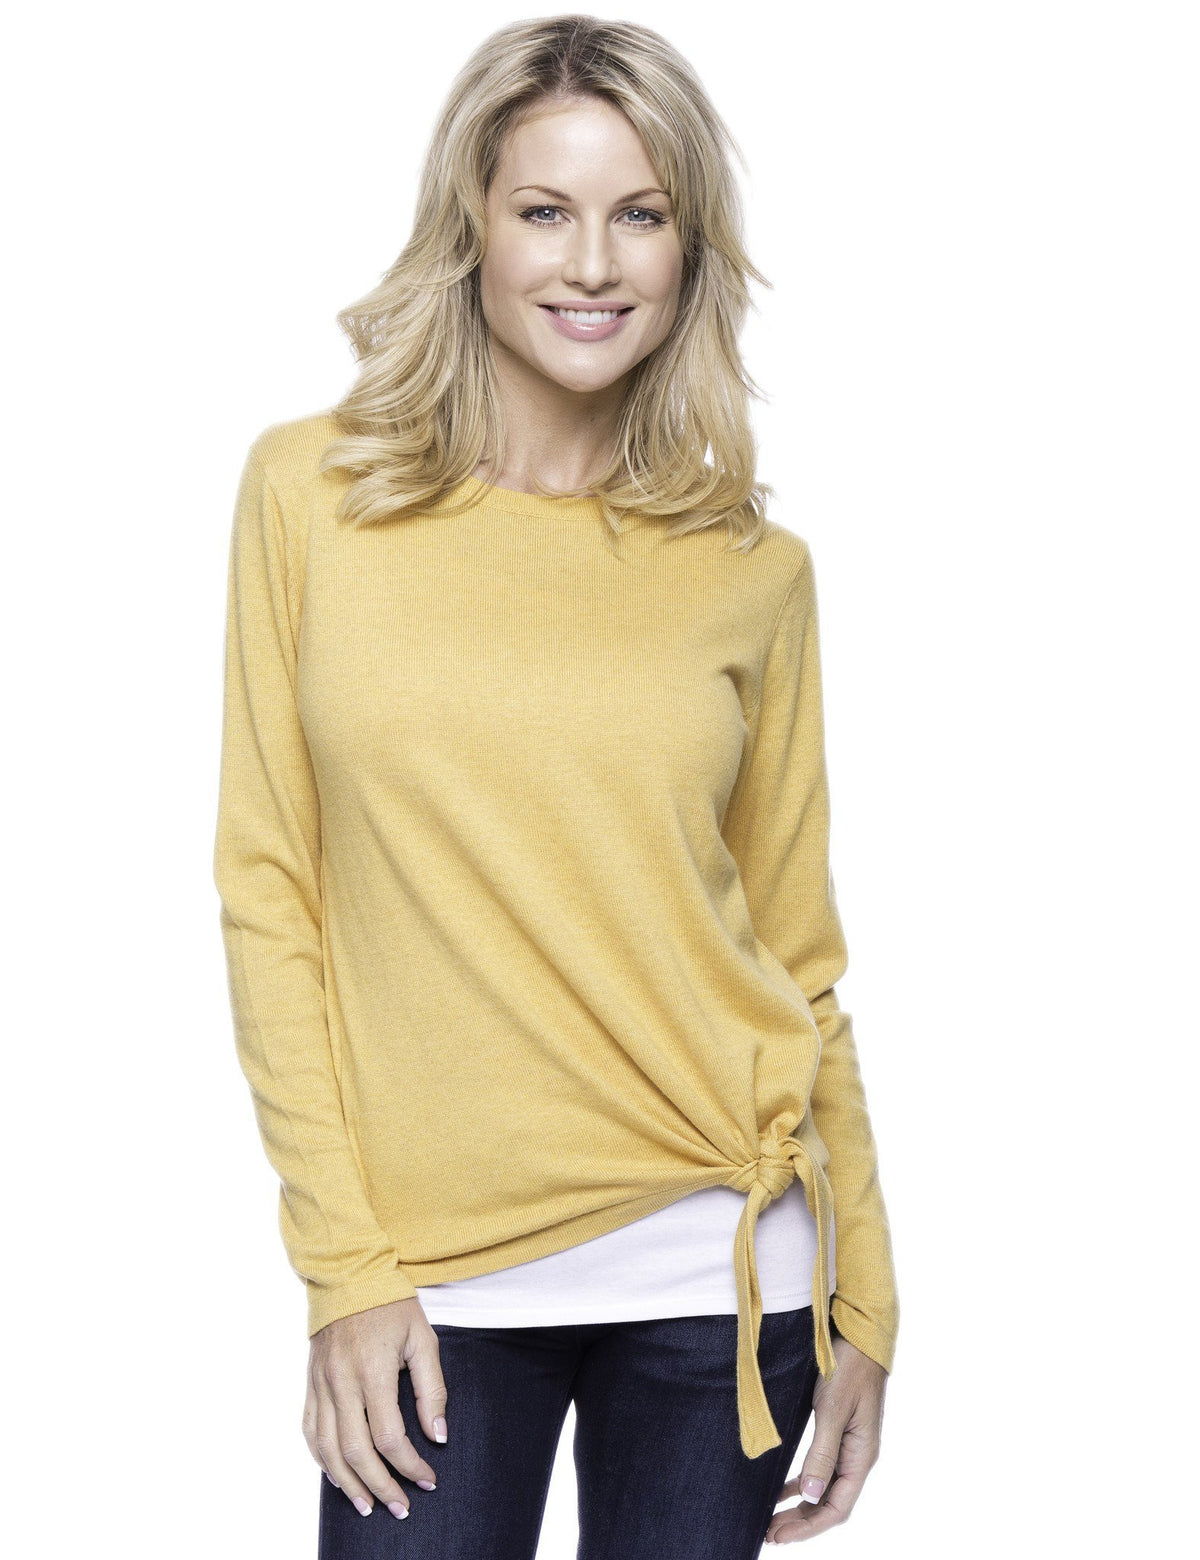 Women's Cashmere Blend Bateau Neck Sweater with Hem Tie - Mustard